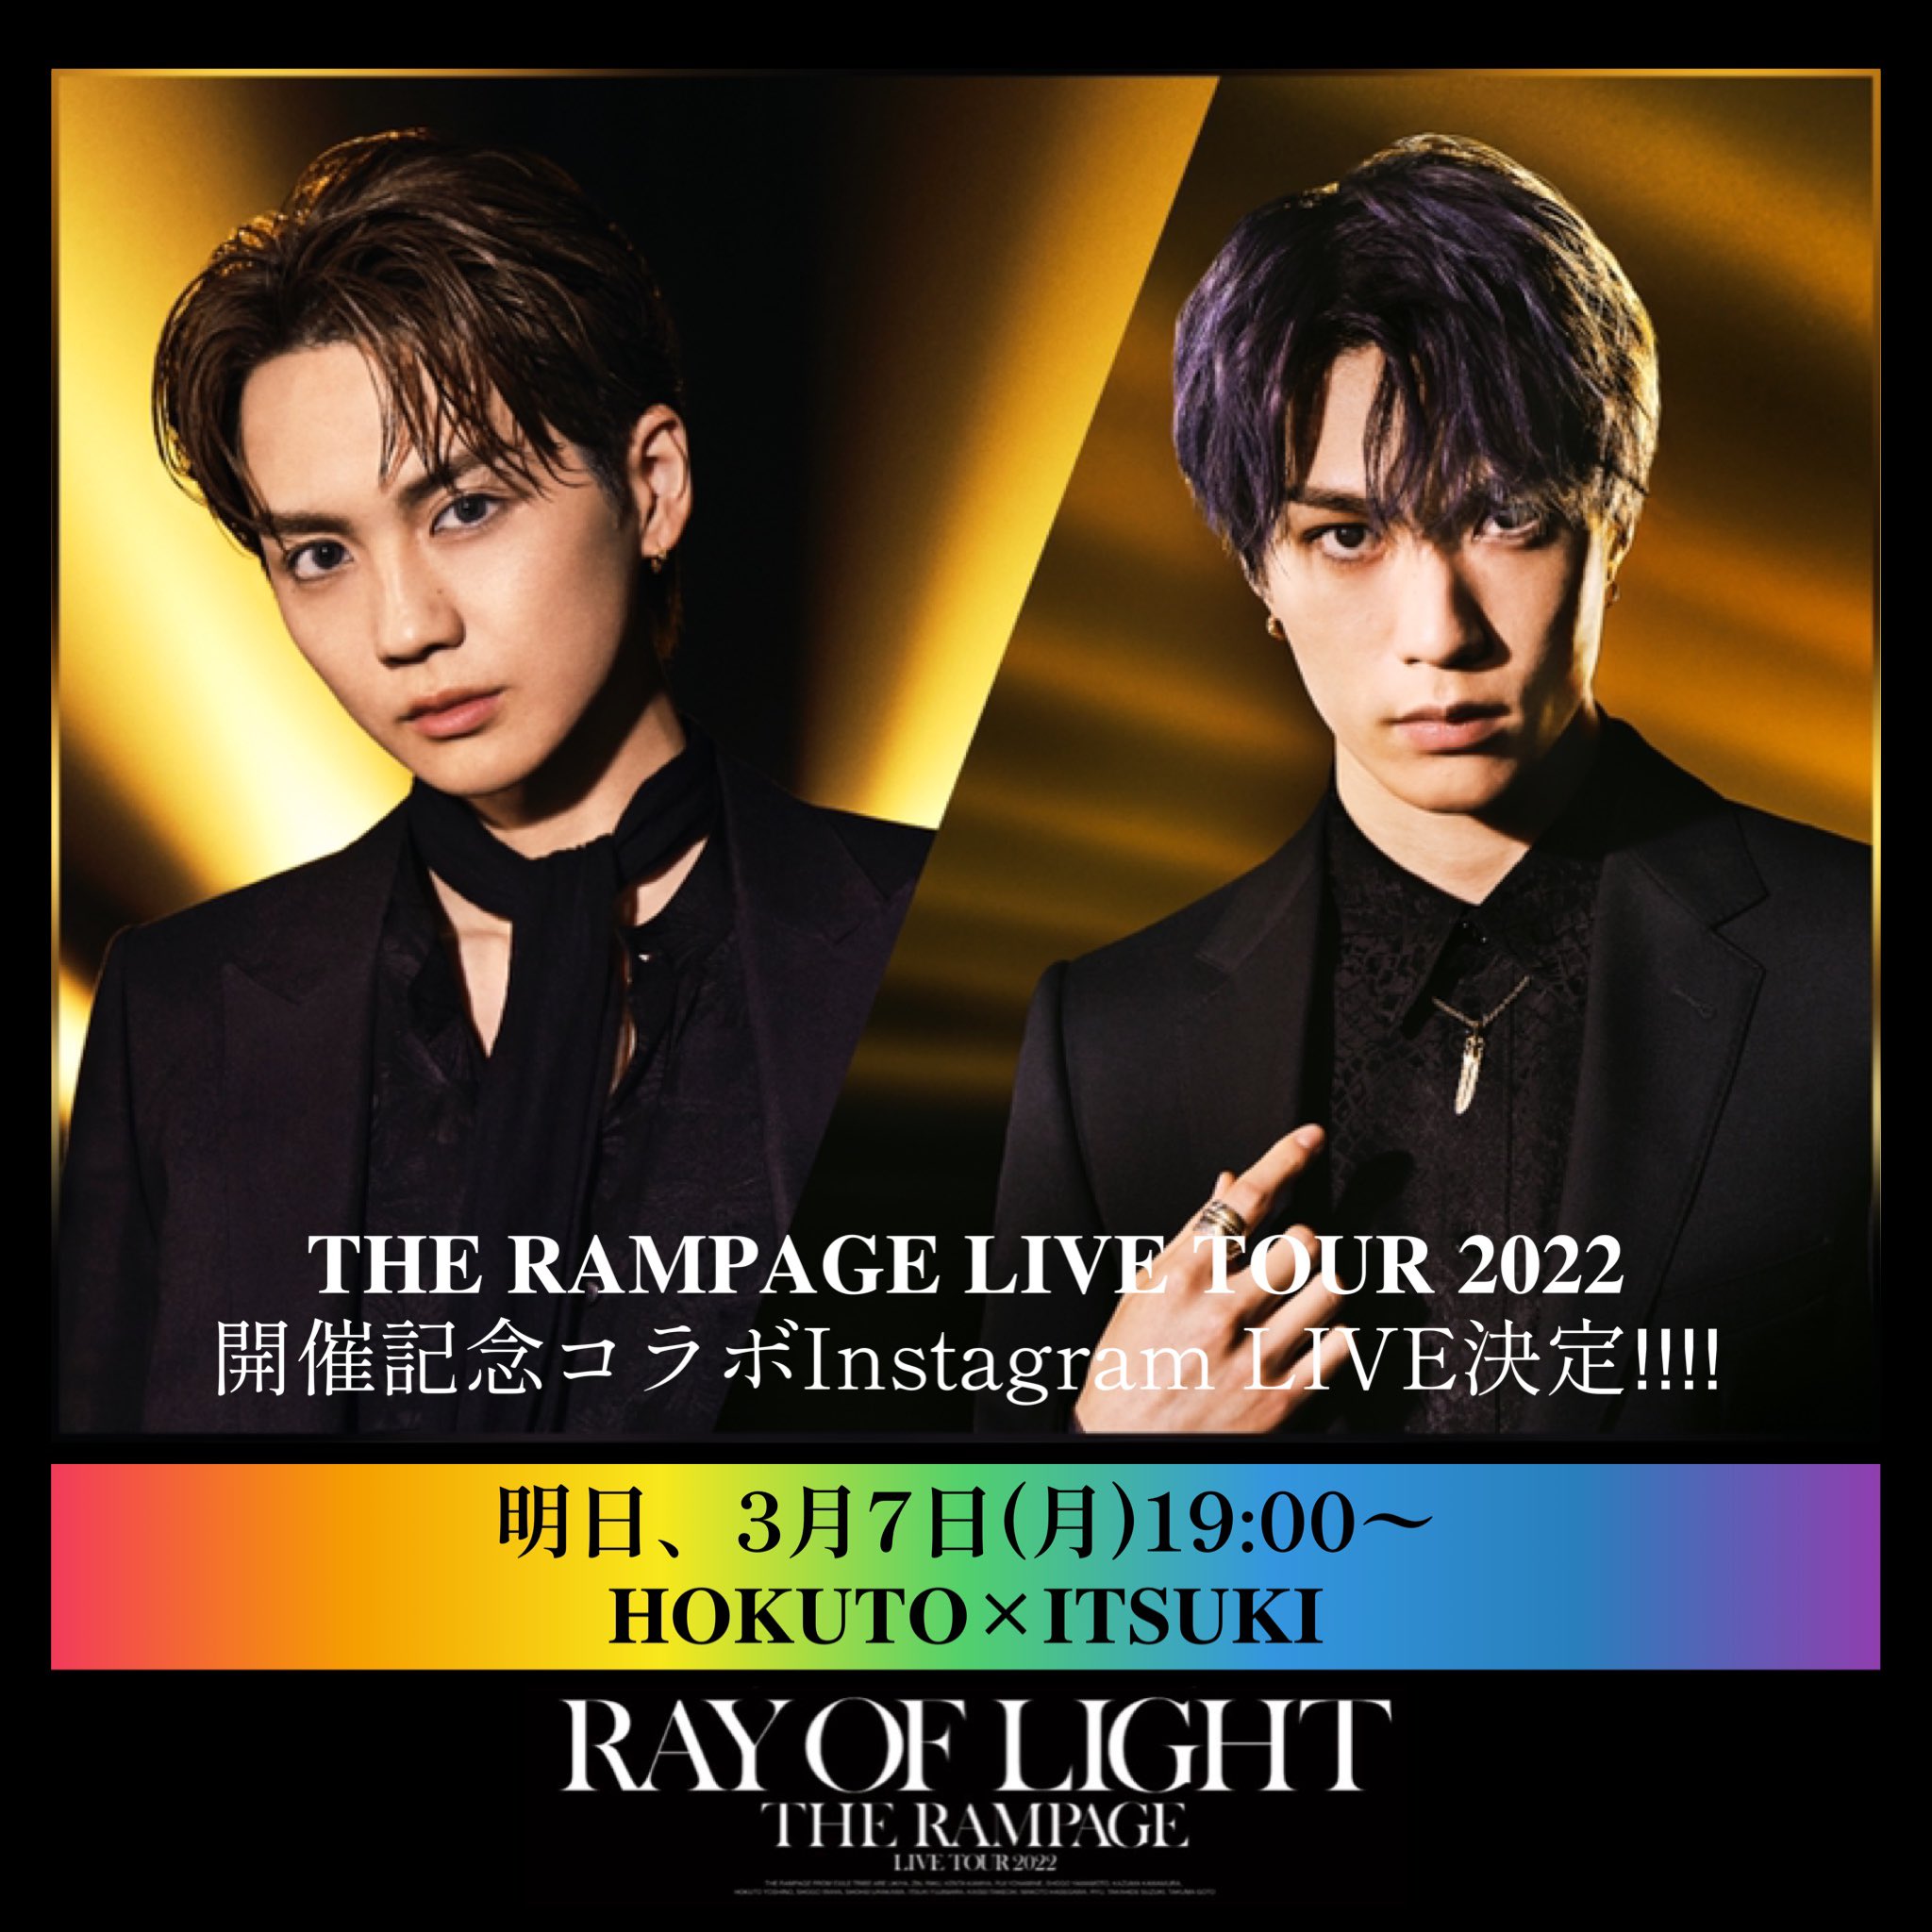 RAY OF LIGHT フリスビー 神谷健太 THE RAMPAGE ランペ | nate